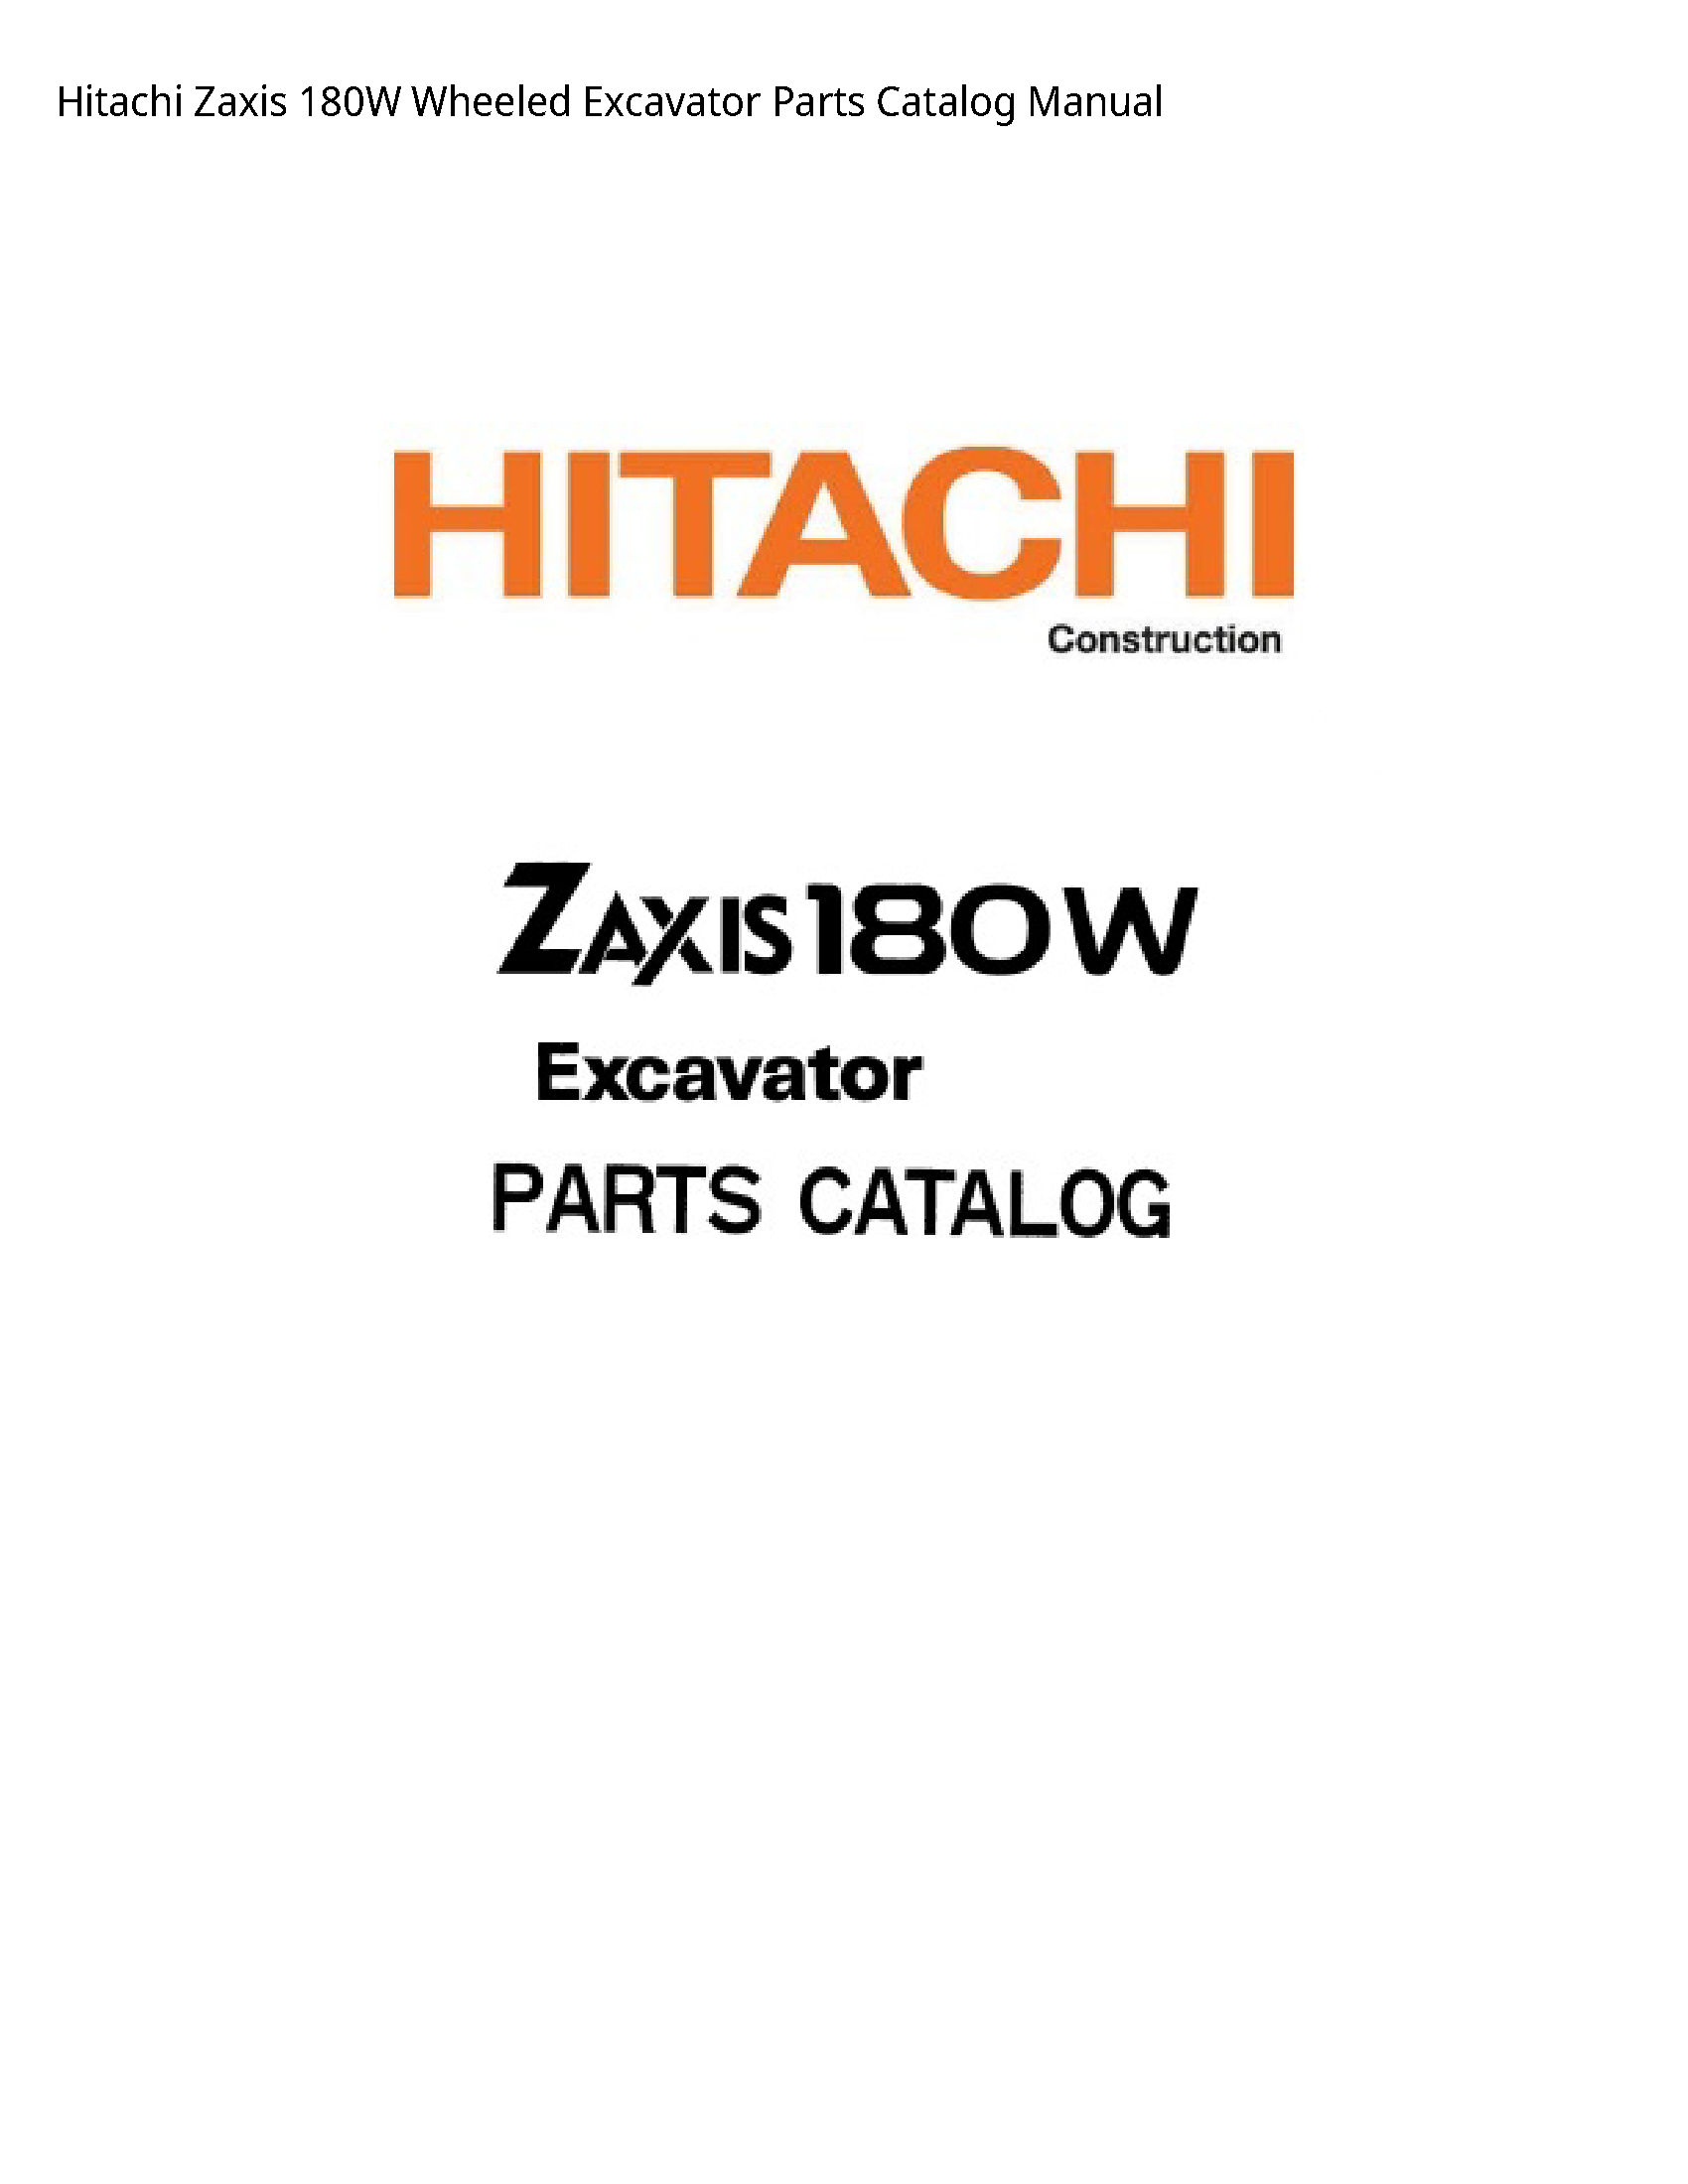 Hitachi 180W Zaxis Wheeled Excavator Parts Catalog manual